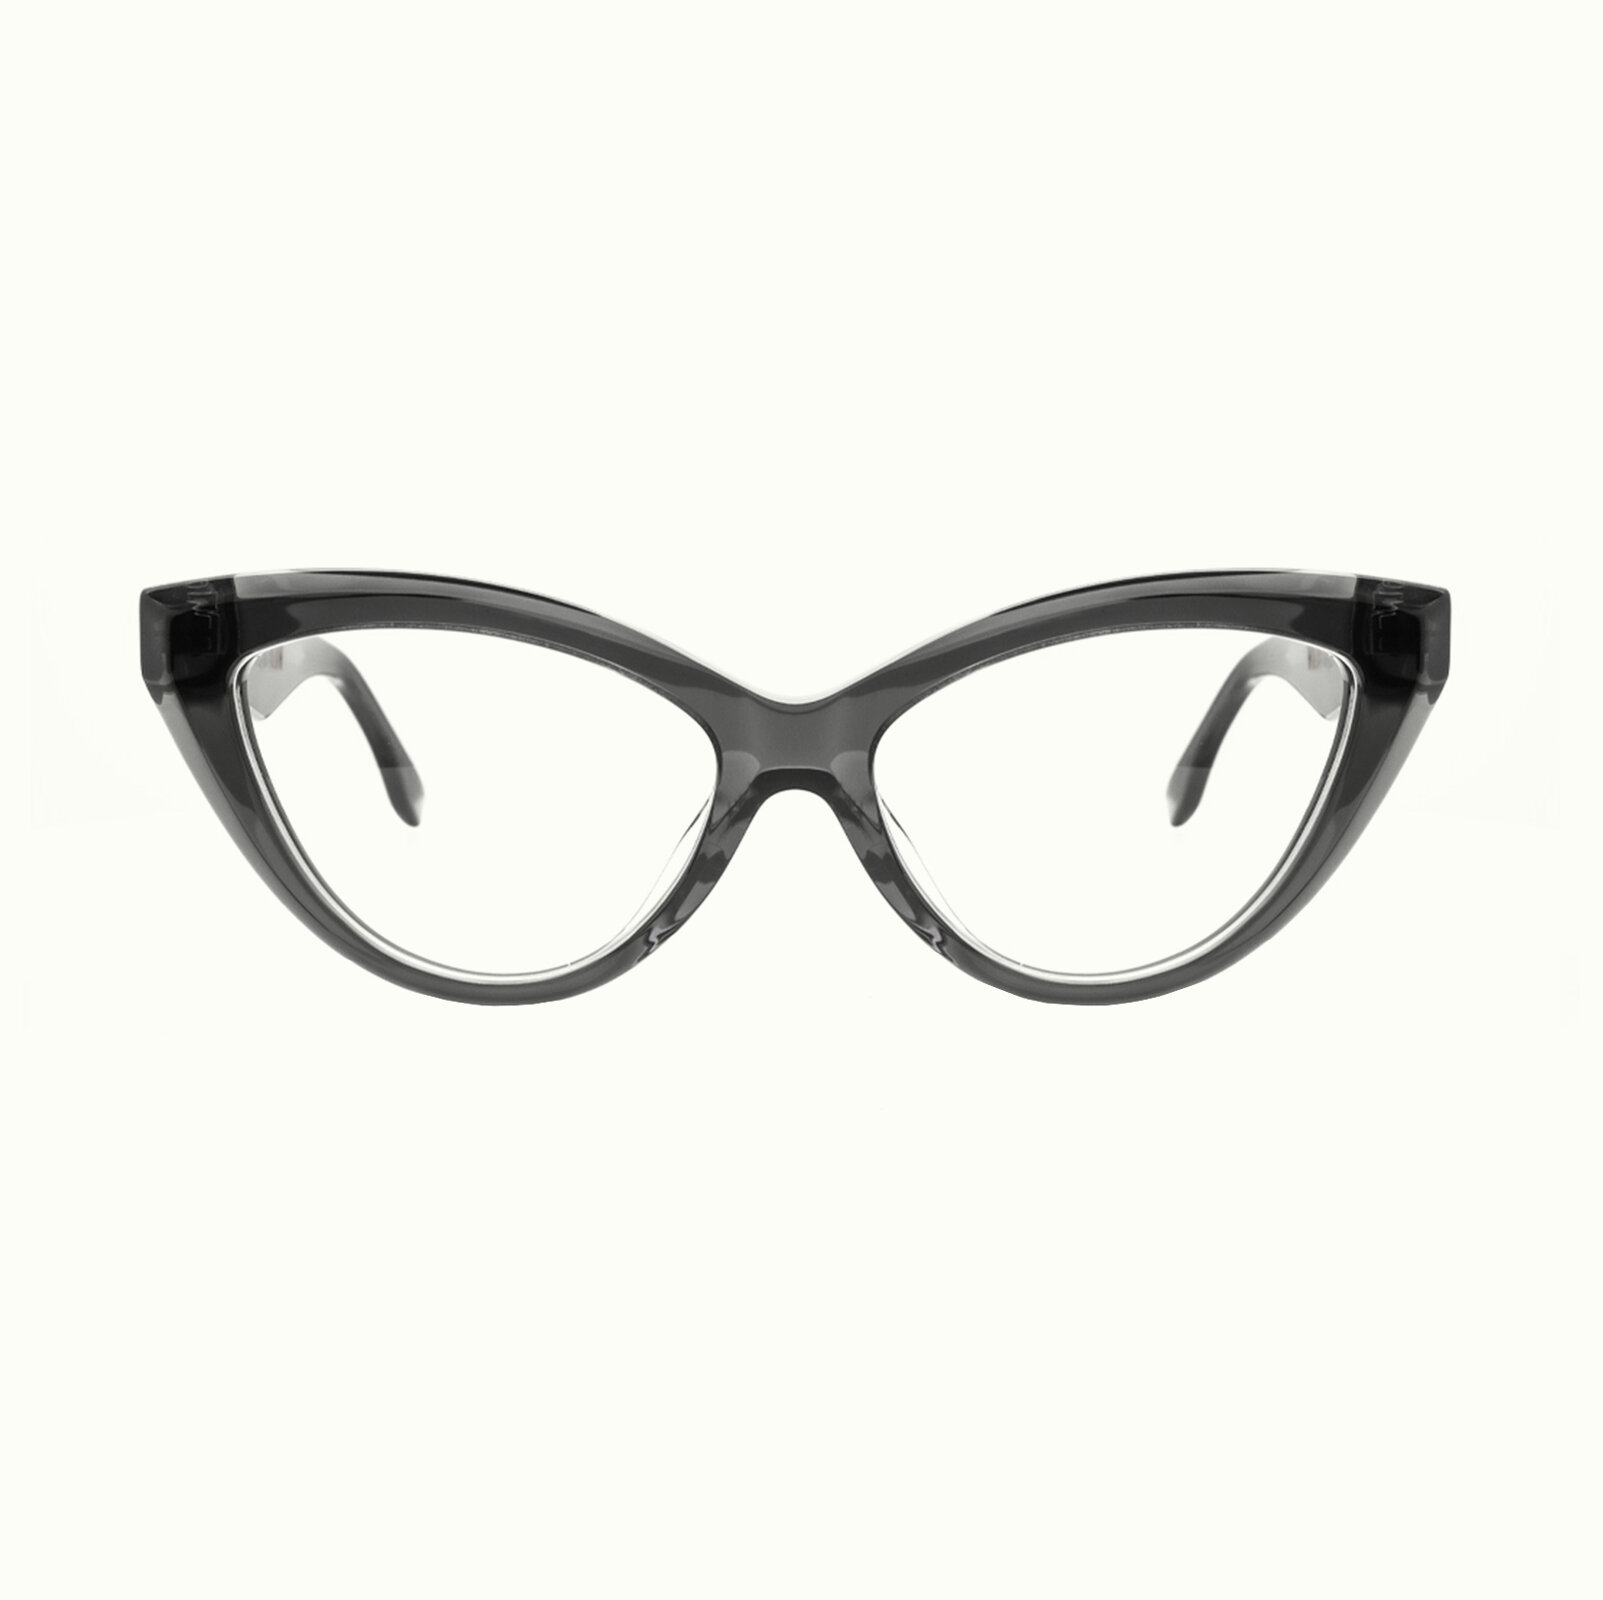 Generation Eyewear - Handcrafted Luxury Glasses